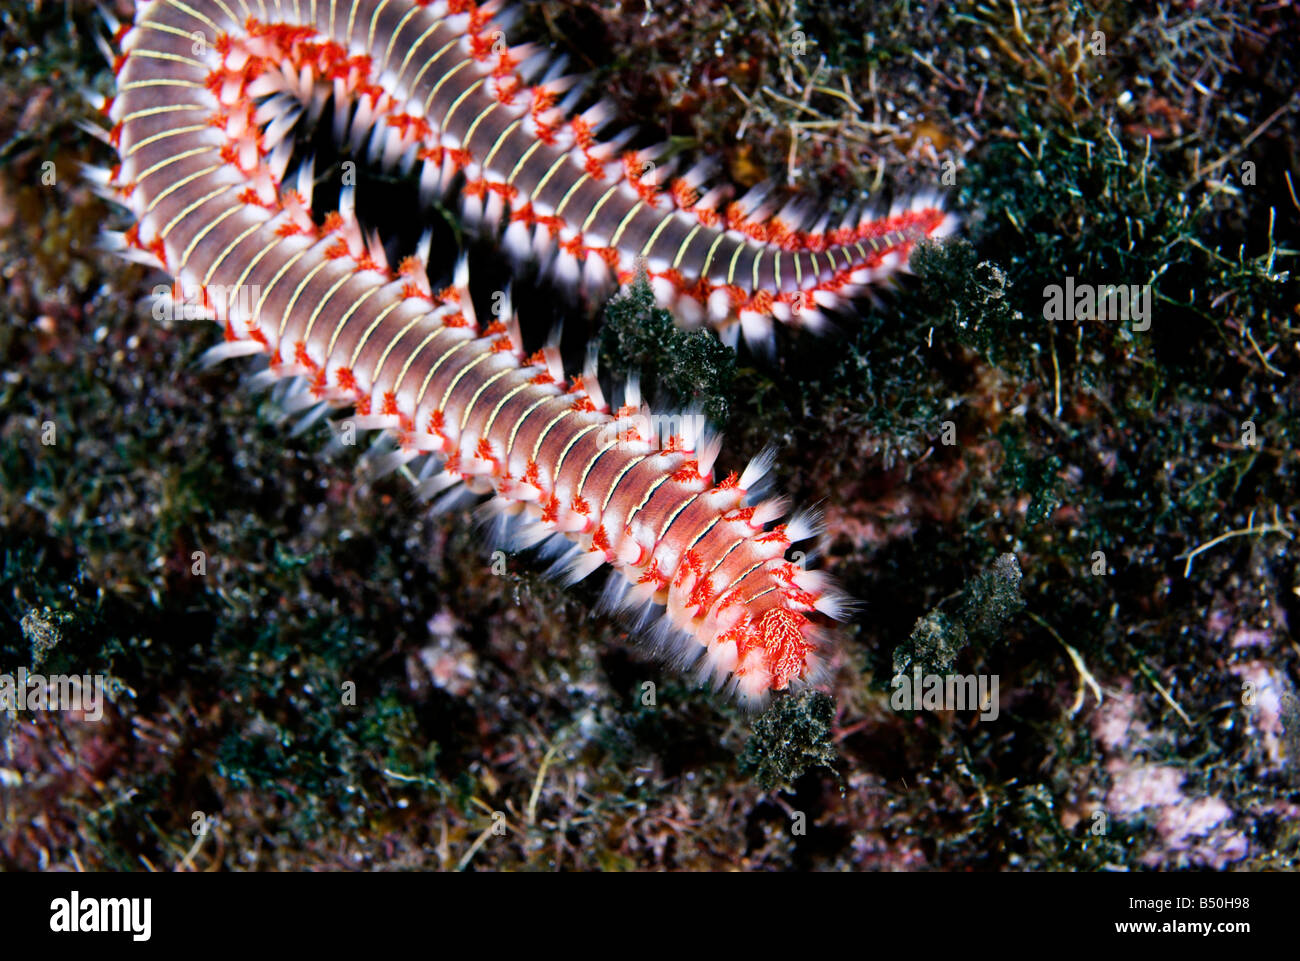 Bearded fireworm or white tufted worm Hermodice carunculata underwater closeup Stock Photo